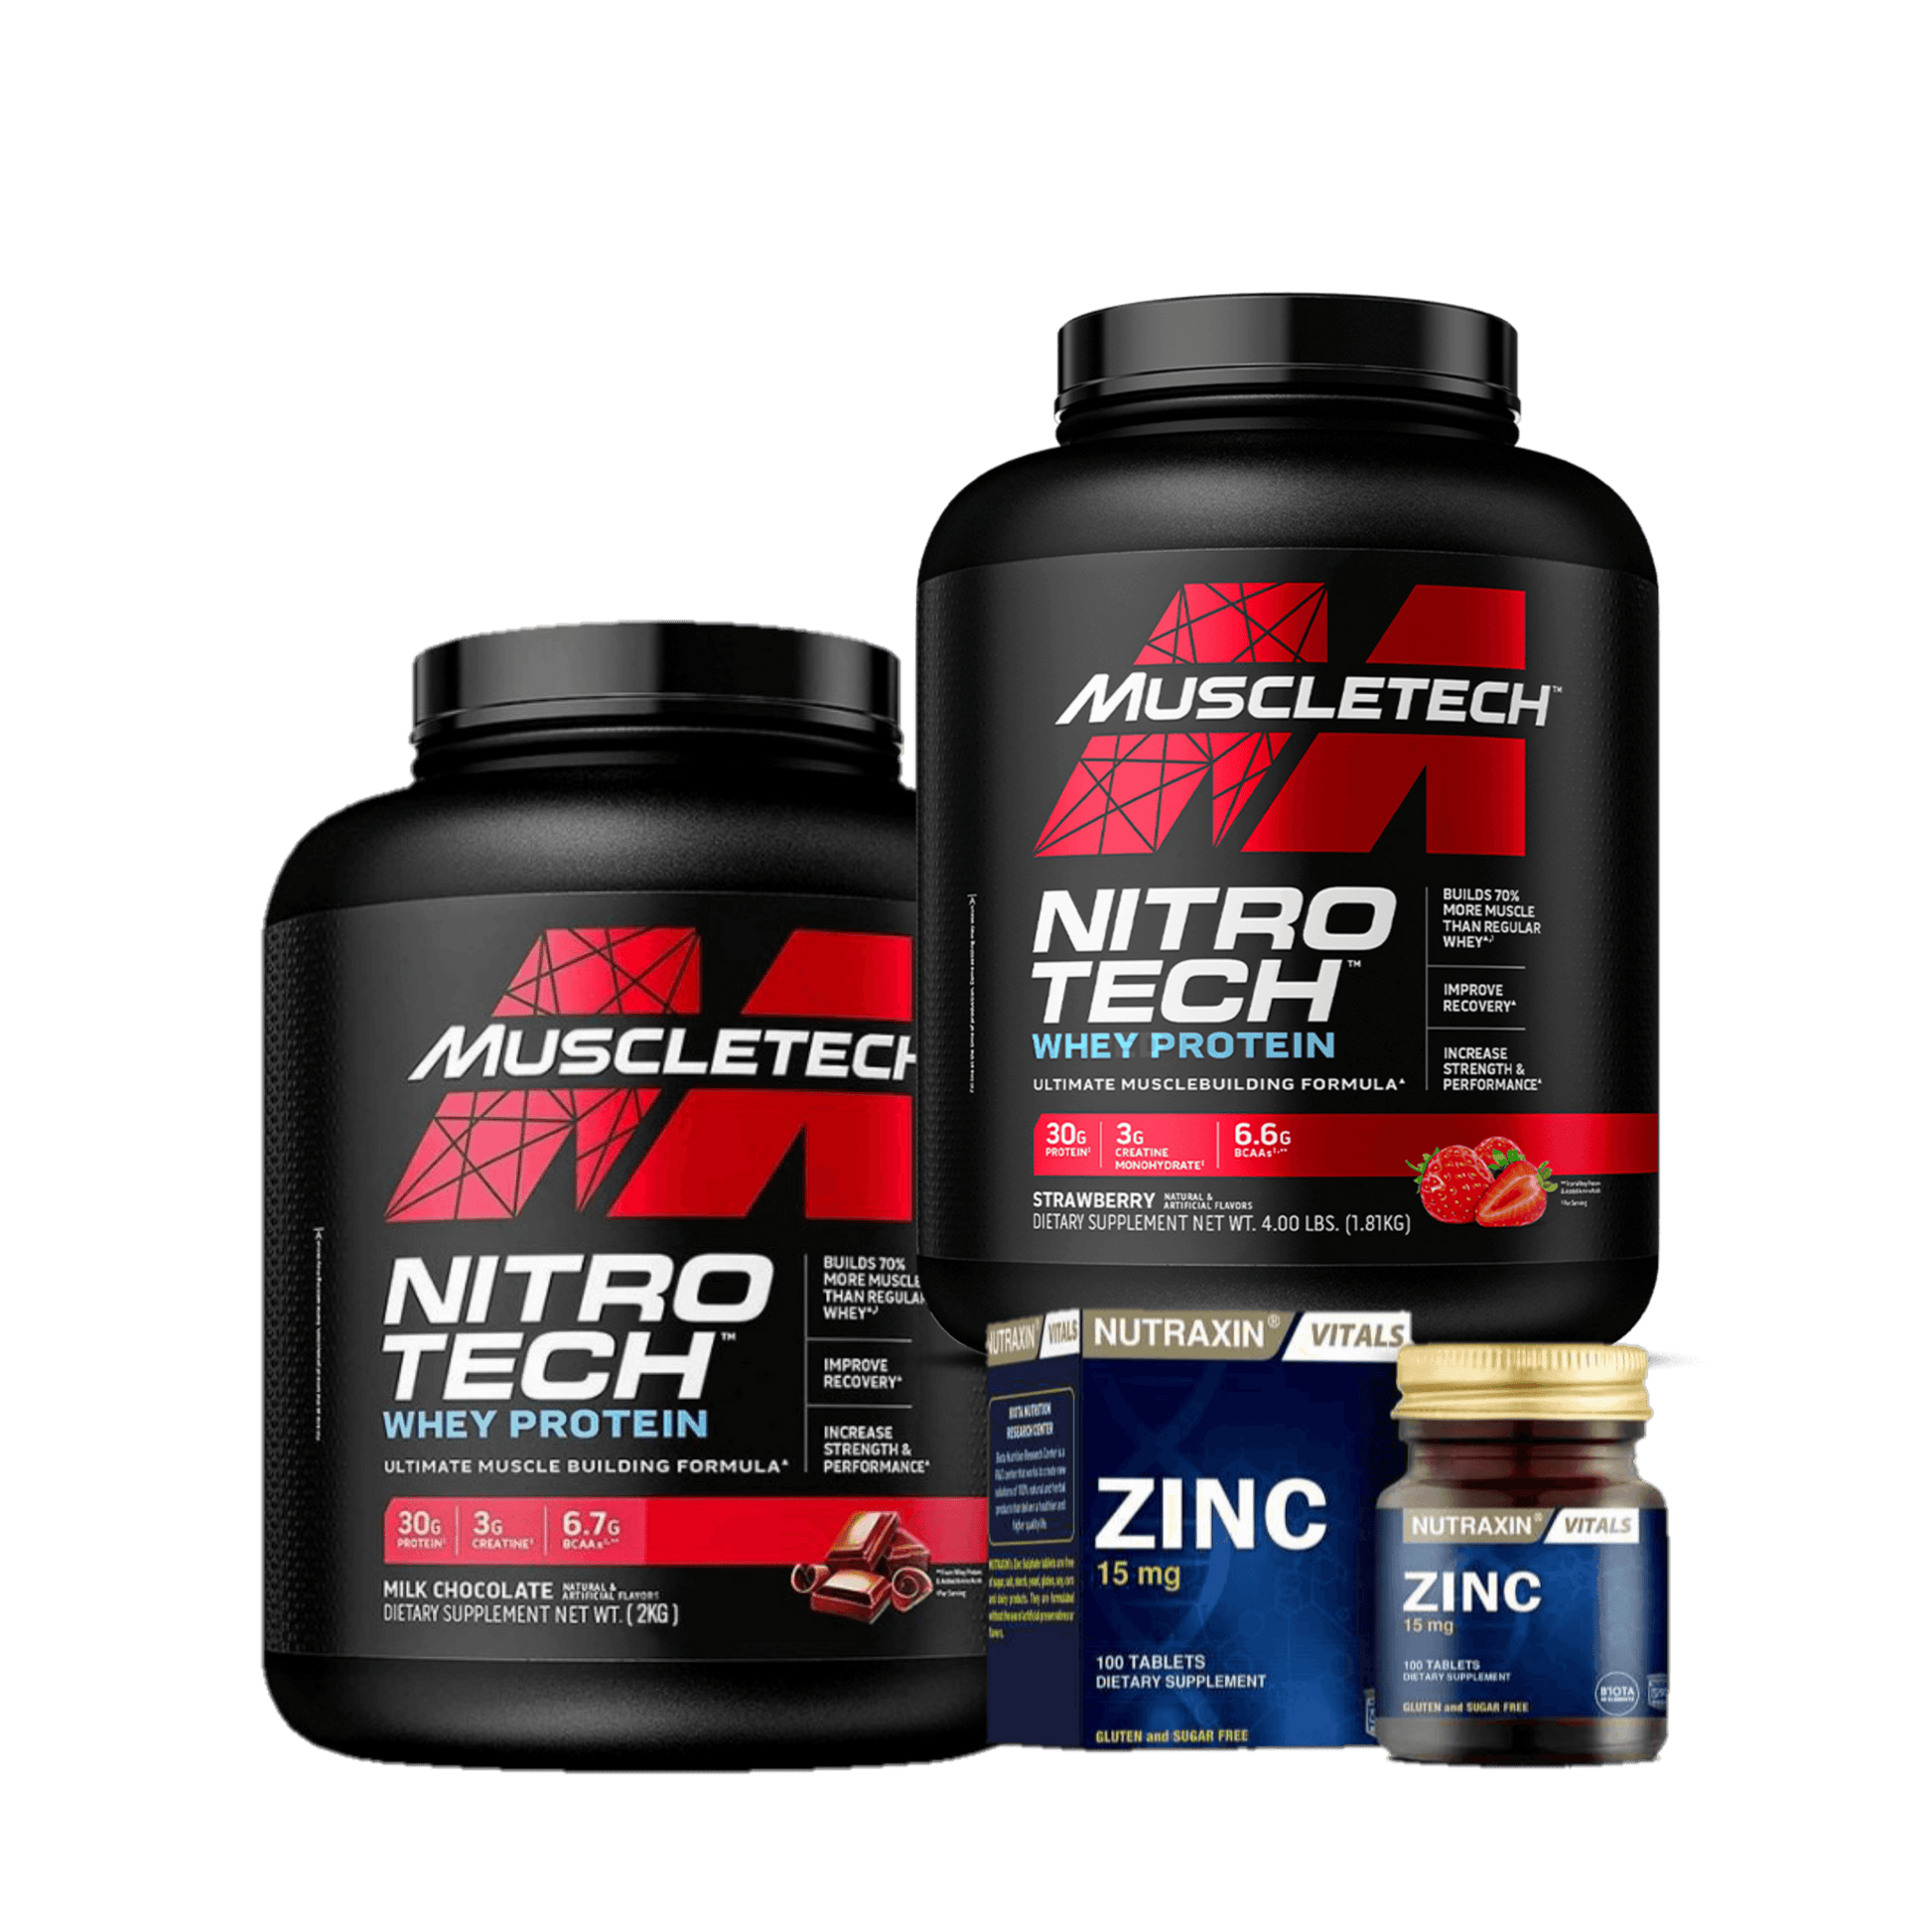 Nitrotech x2 + zinc 100 Servings - The Supplements Factory